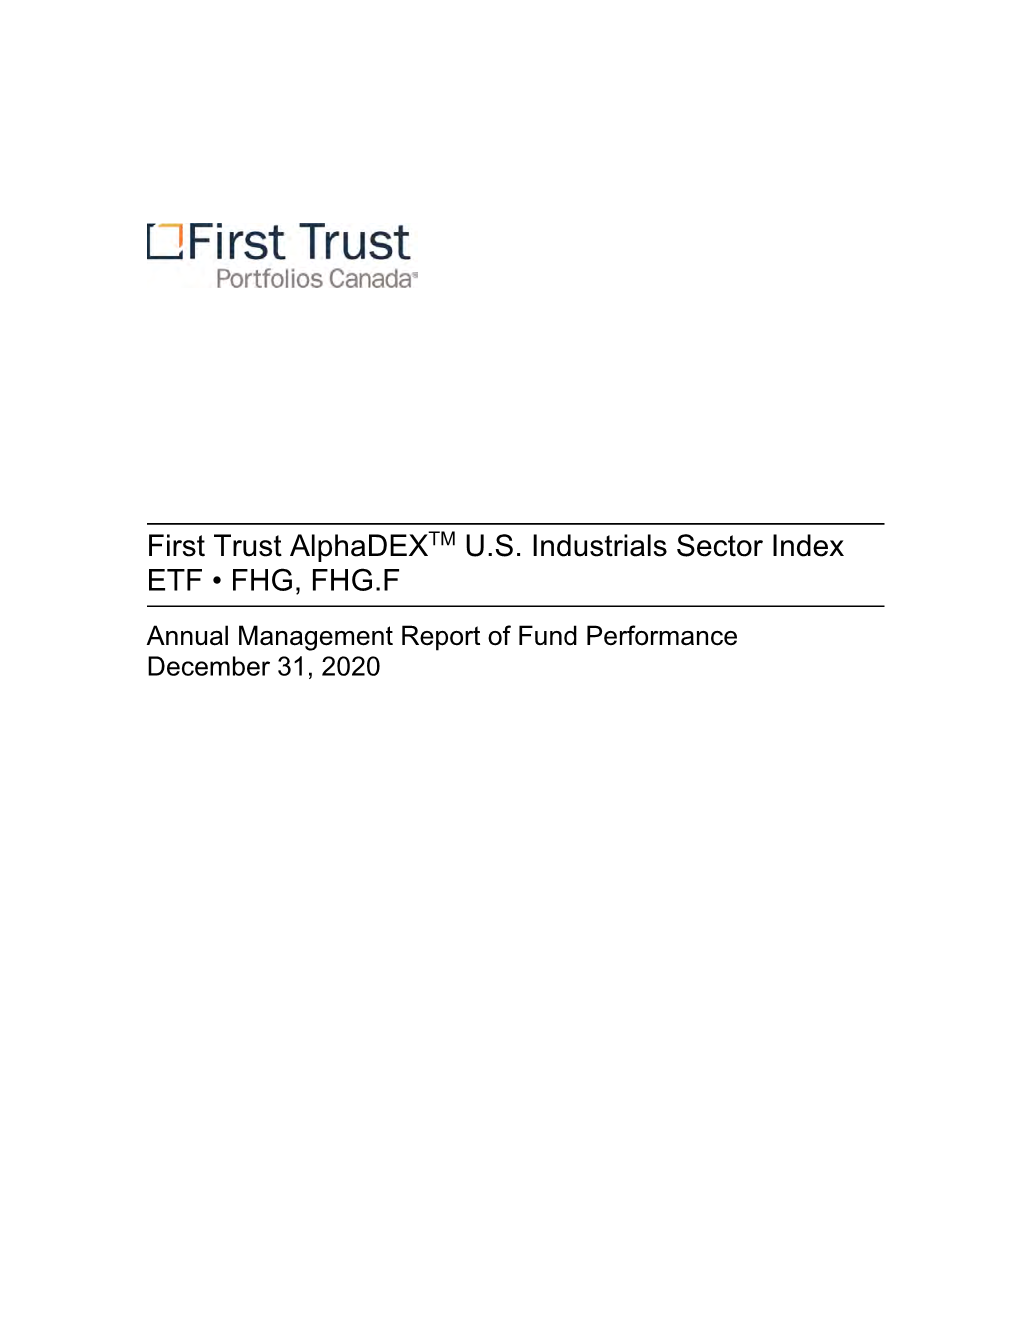 First Trust Alphadextm U.S. Industrials Sector Index ETF • FHG, FHG.F